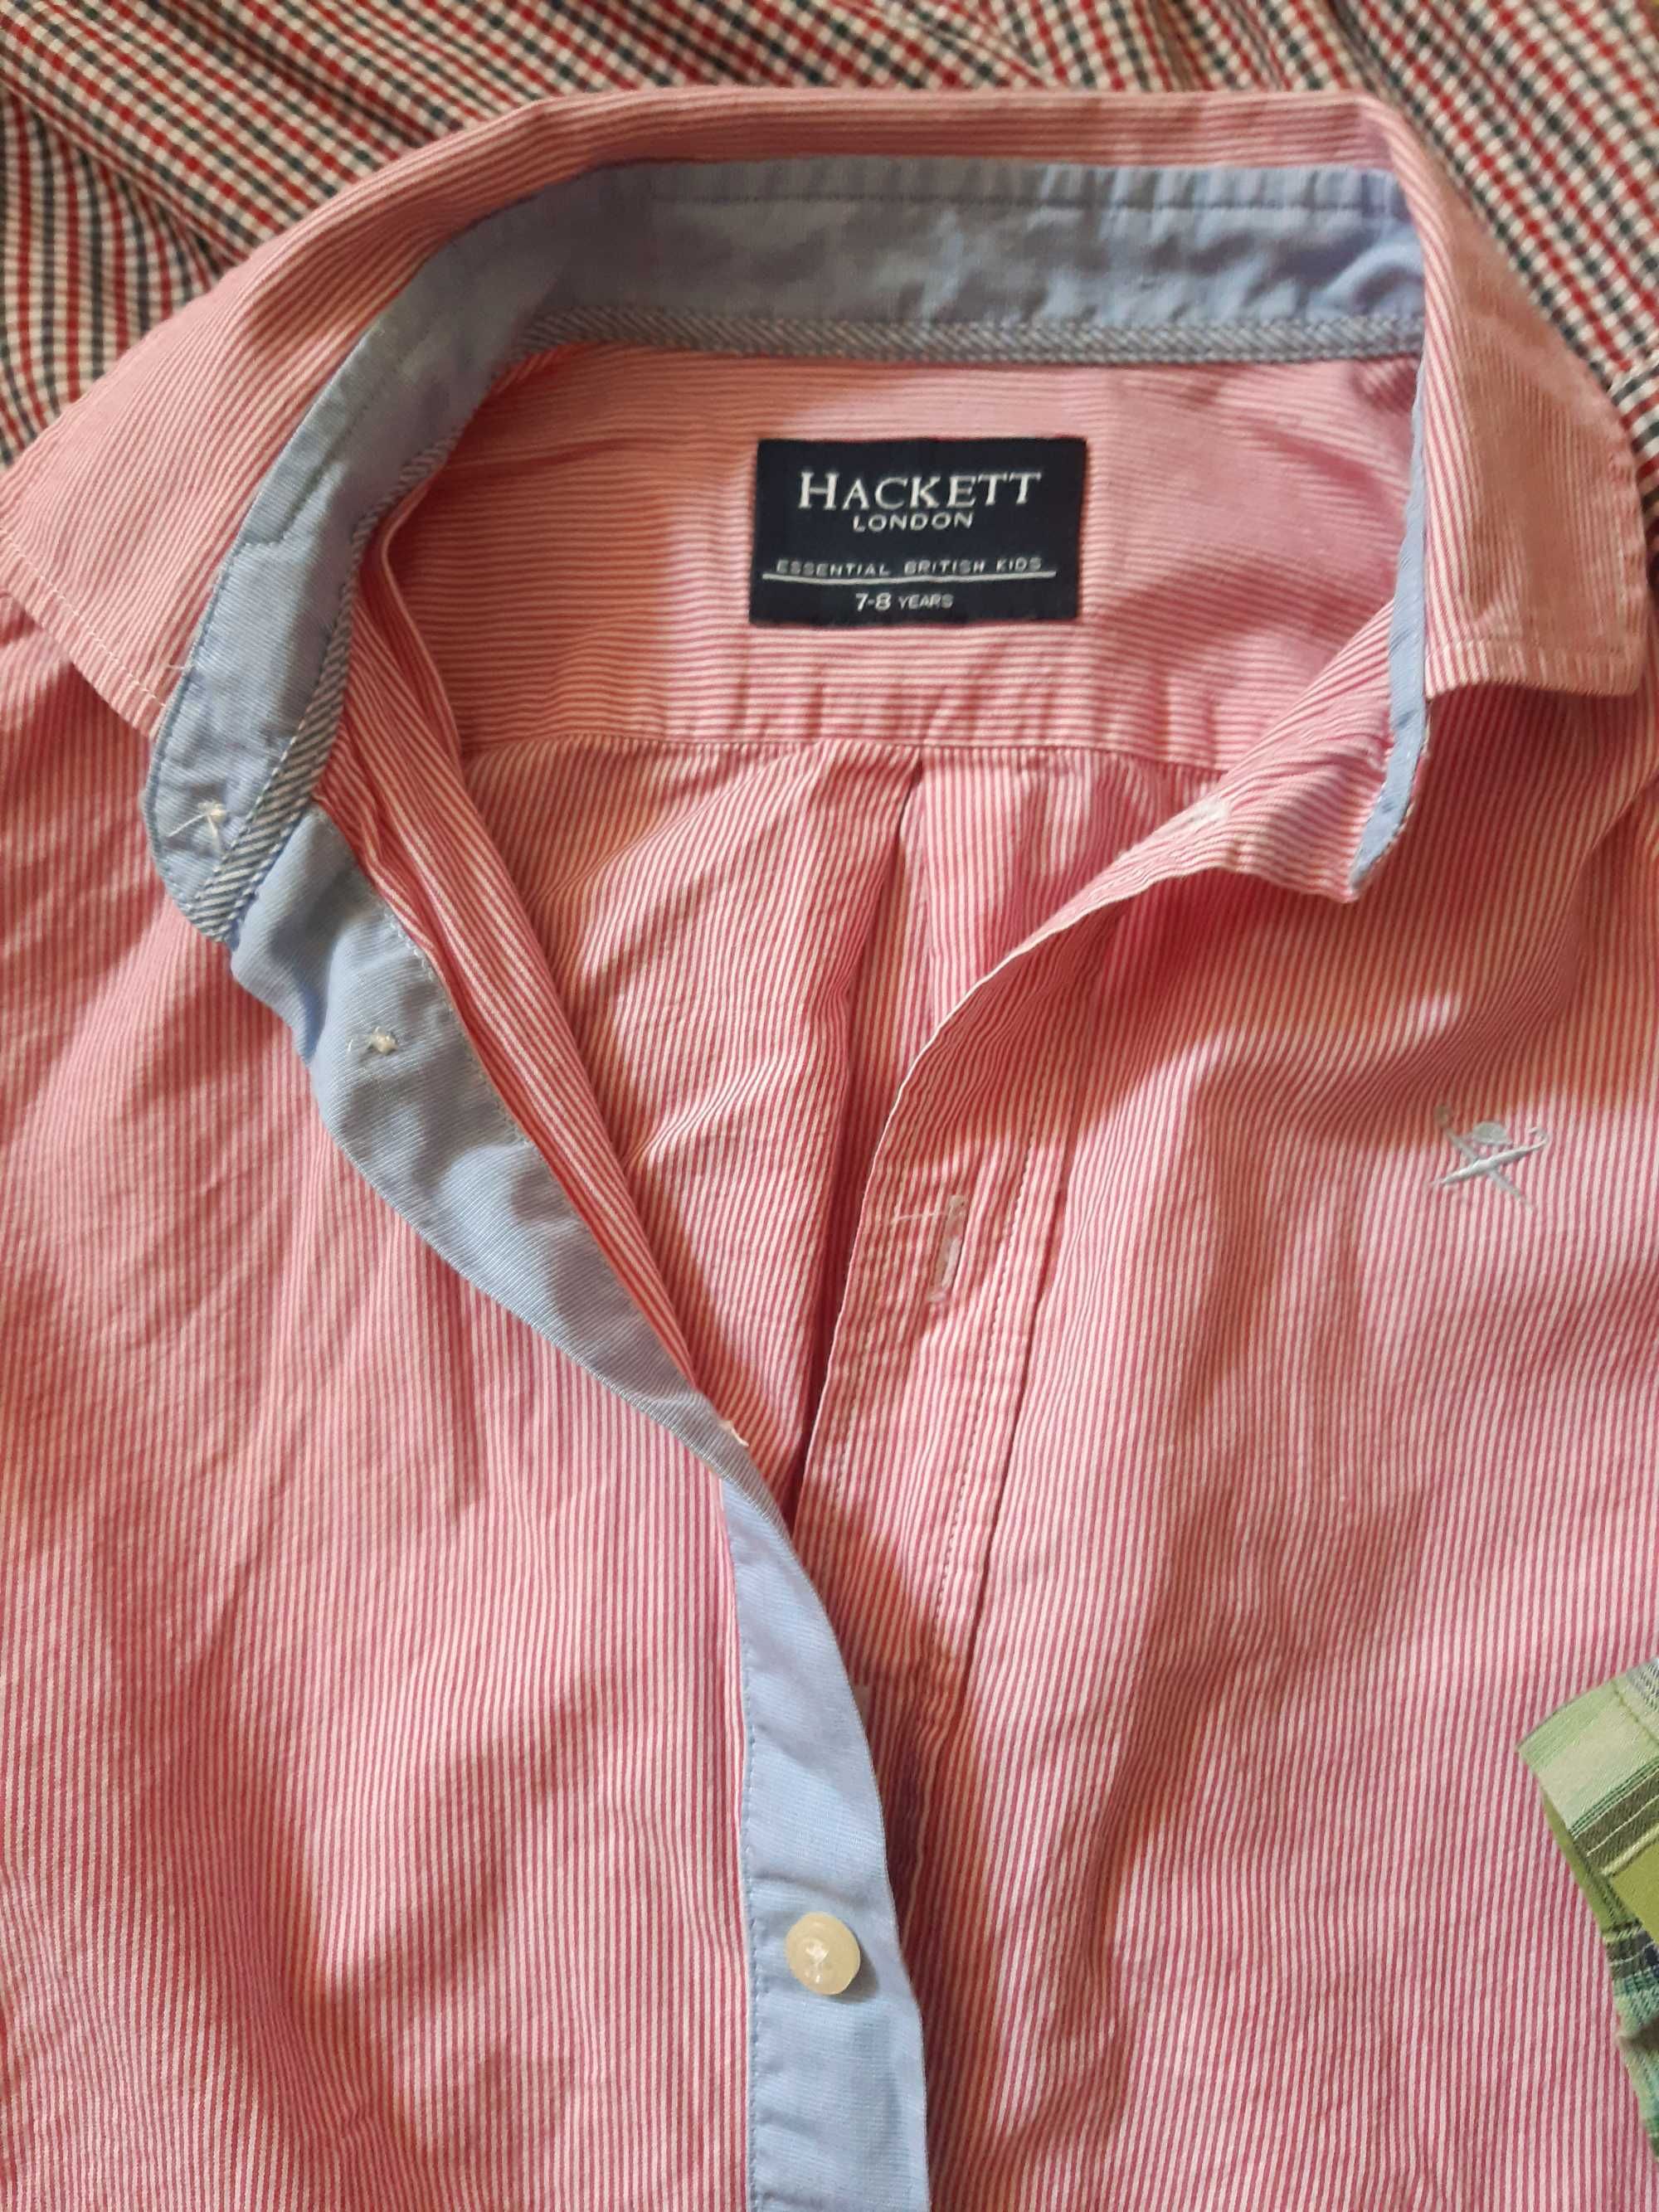 сорочки для хлопця,H&M,Hackett,Next,Entry